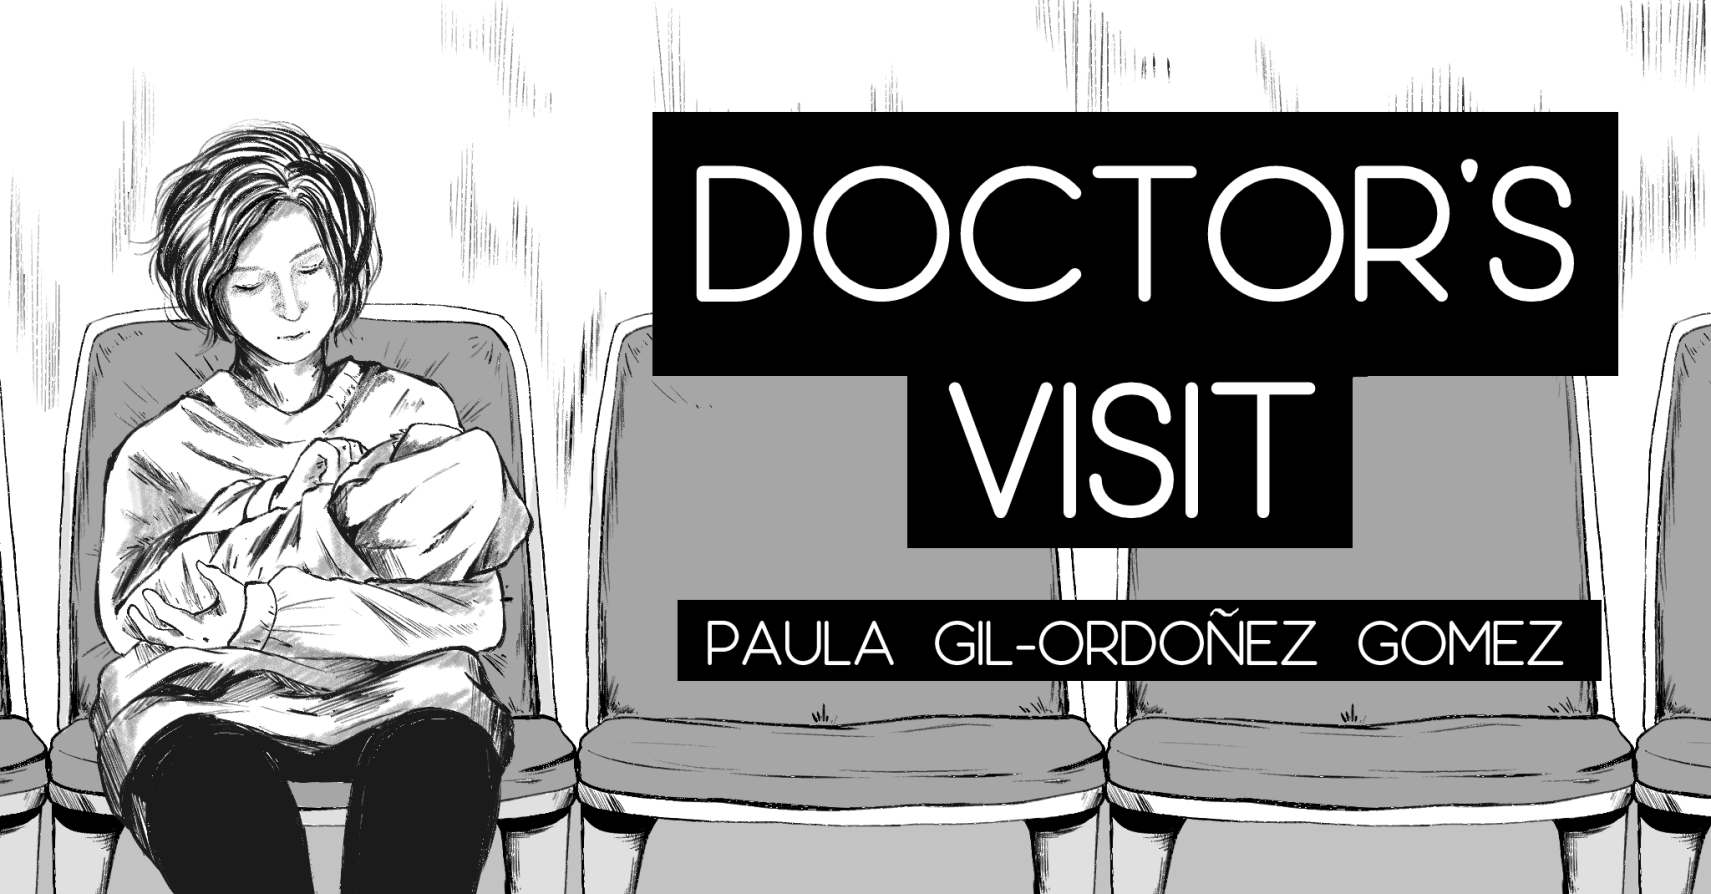 DOCTOR’S VISIT by Paula Gil-Ordoñez Gomez